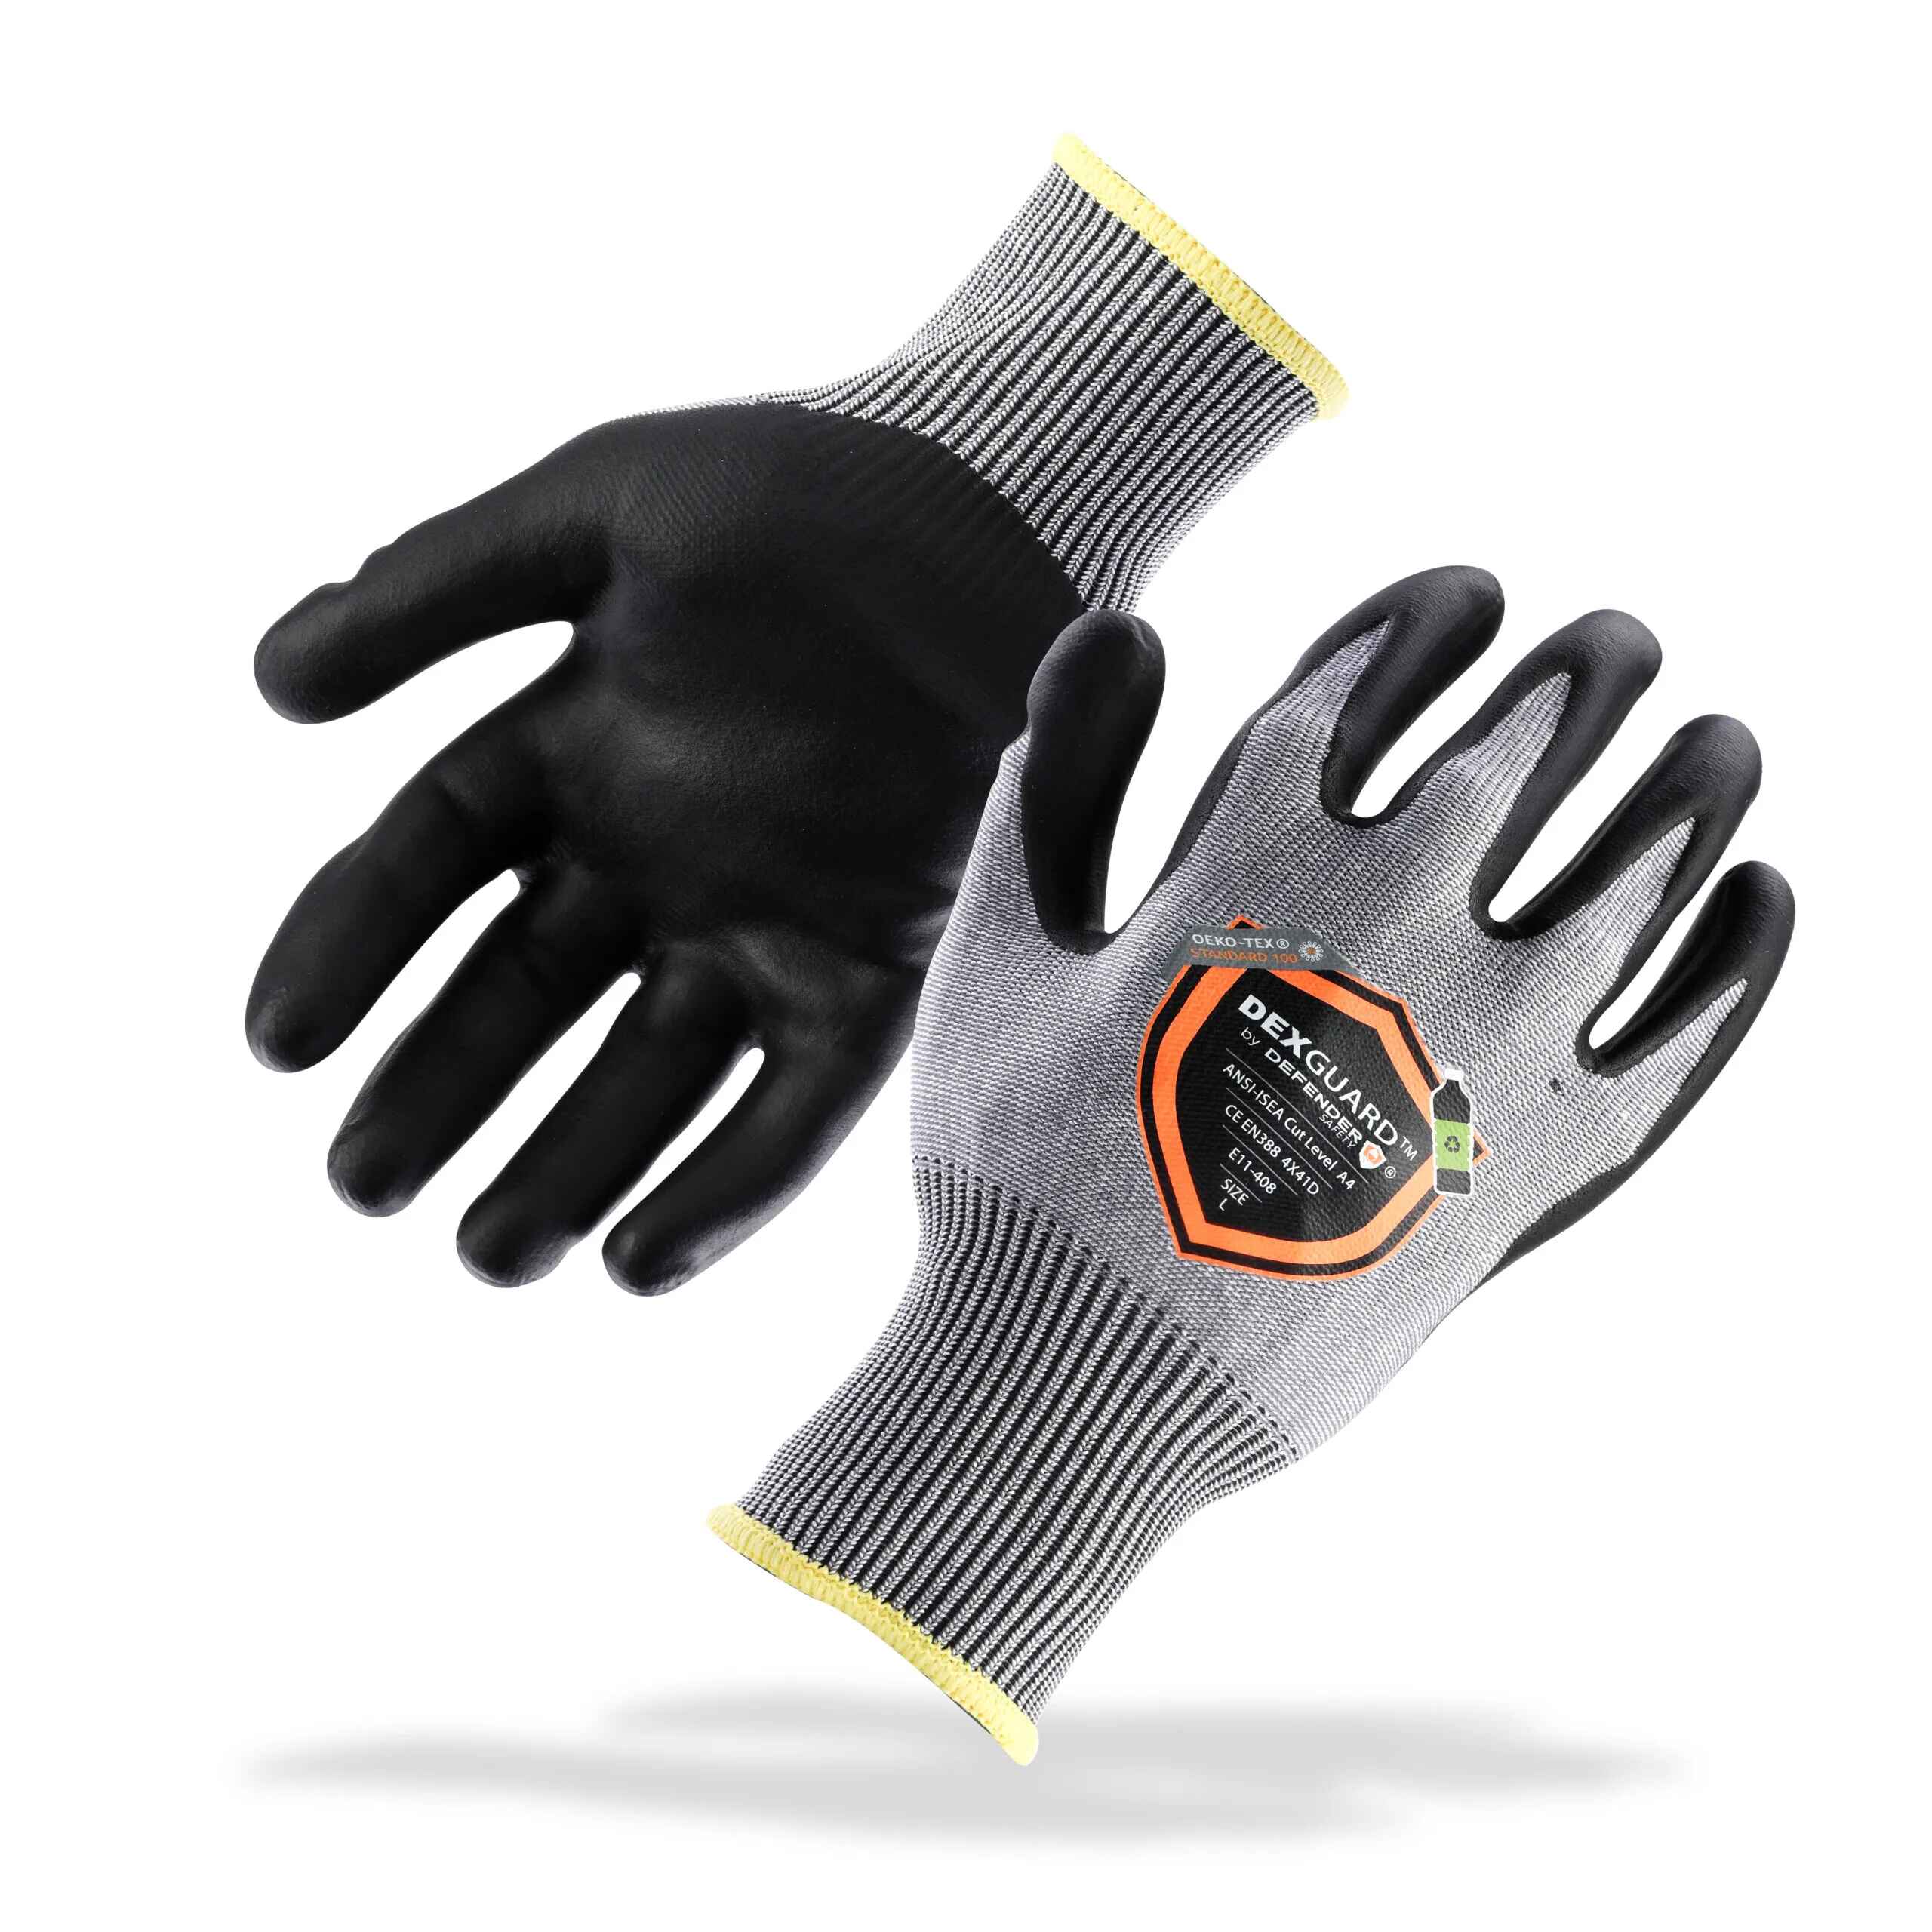 https://cdn.shopify.com/s/files/1/0786/4523/1934/products/dexguard-a4-cut-gloves-level-4-abrasion-resistant-foam-nitrile-coating-277255.jpg?v=1690825175&width=2560